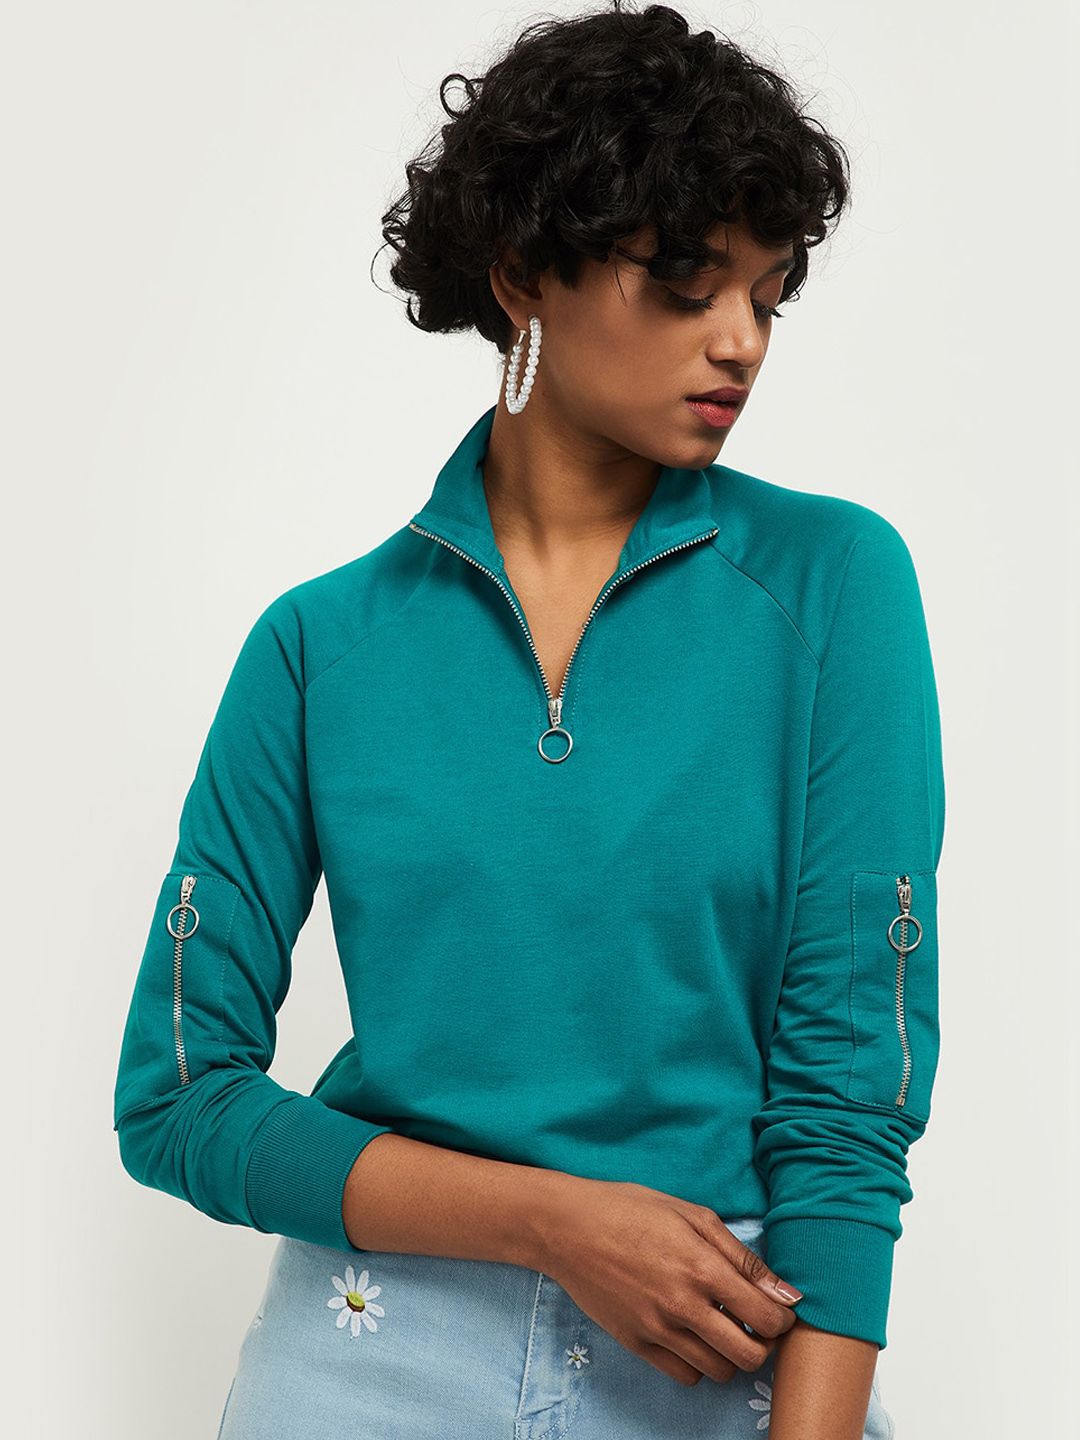 max Women Green Solid Sweatshirt Price in India